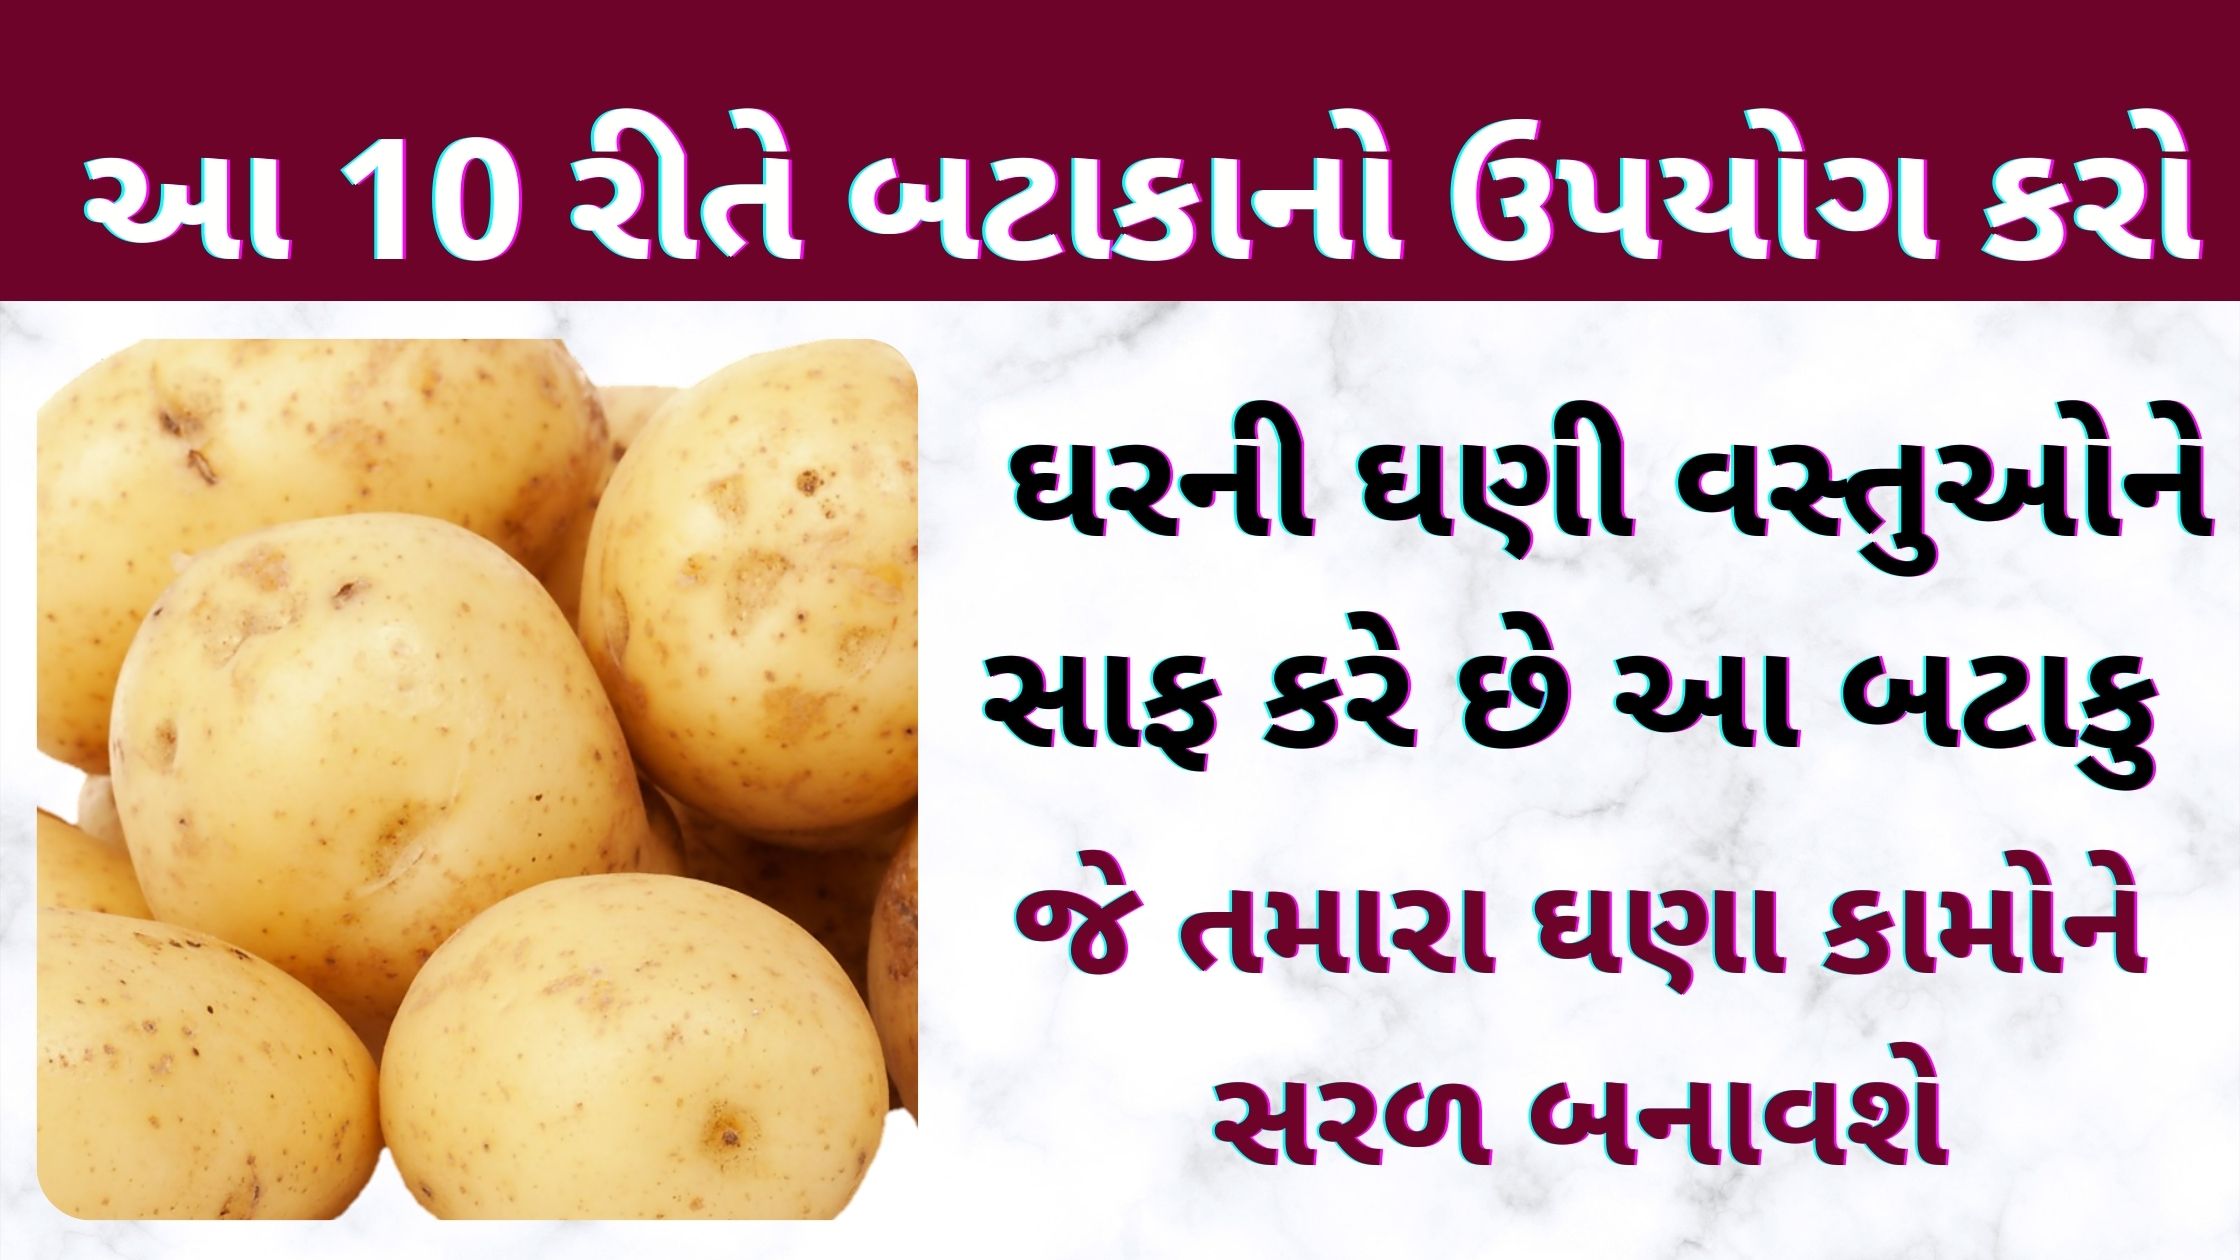 potato benefits in gujarati